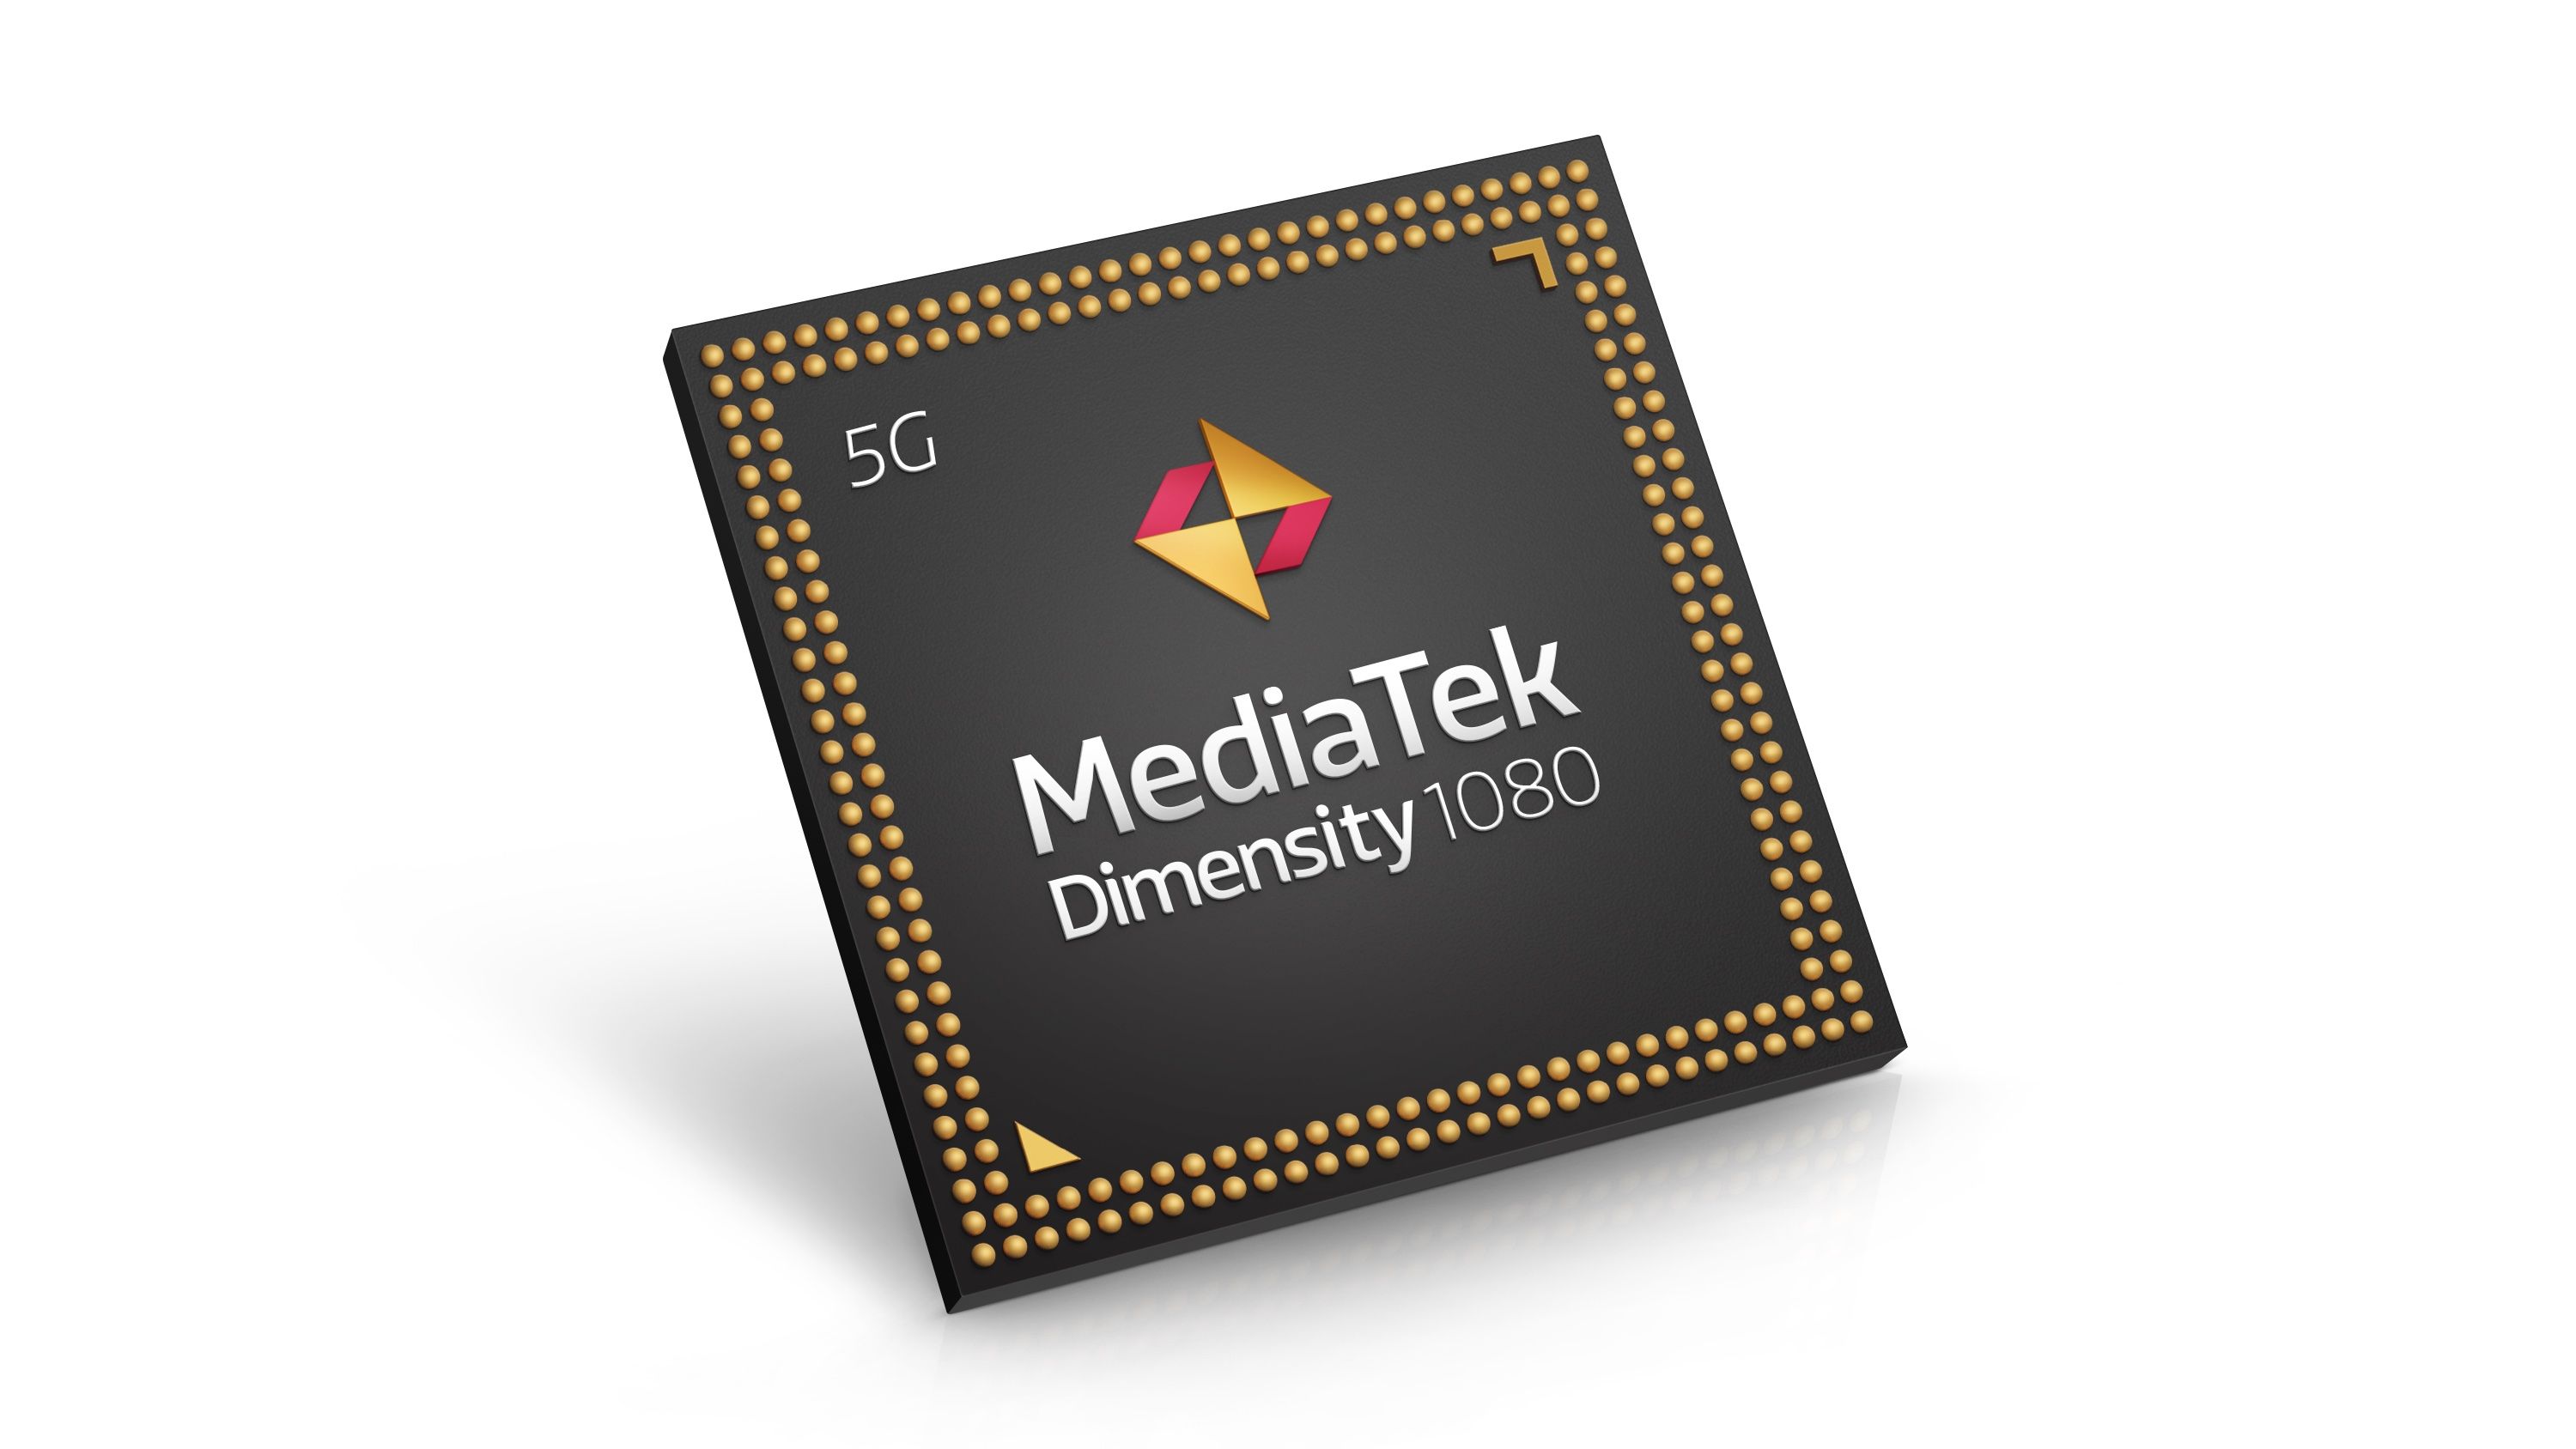 MediaTek's new Dimensity 1080 chipset promises speedy smartphone performance and more photo 1